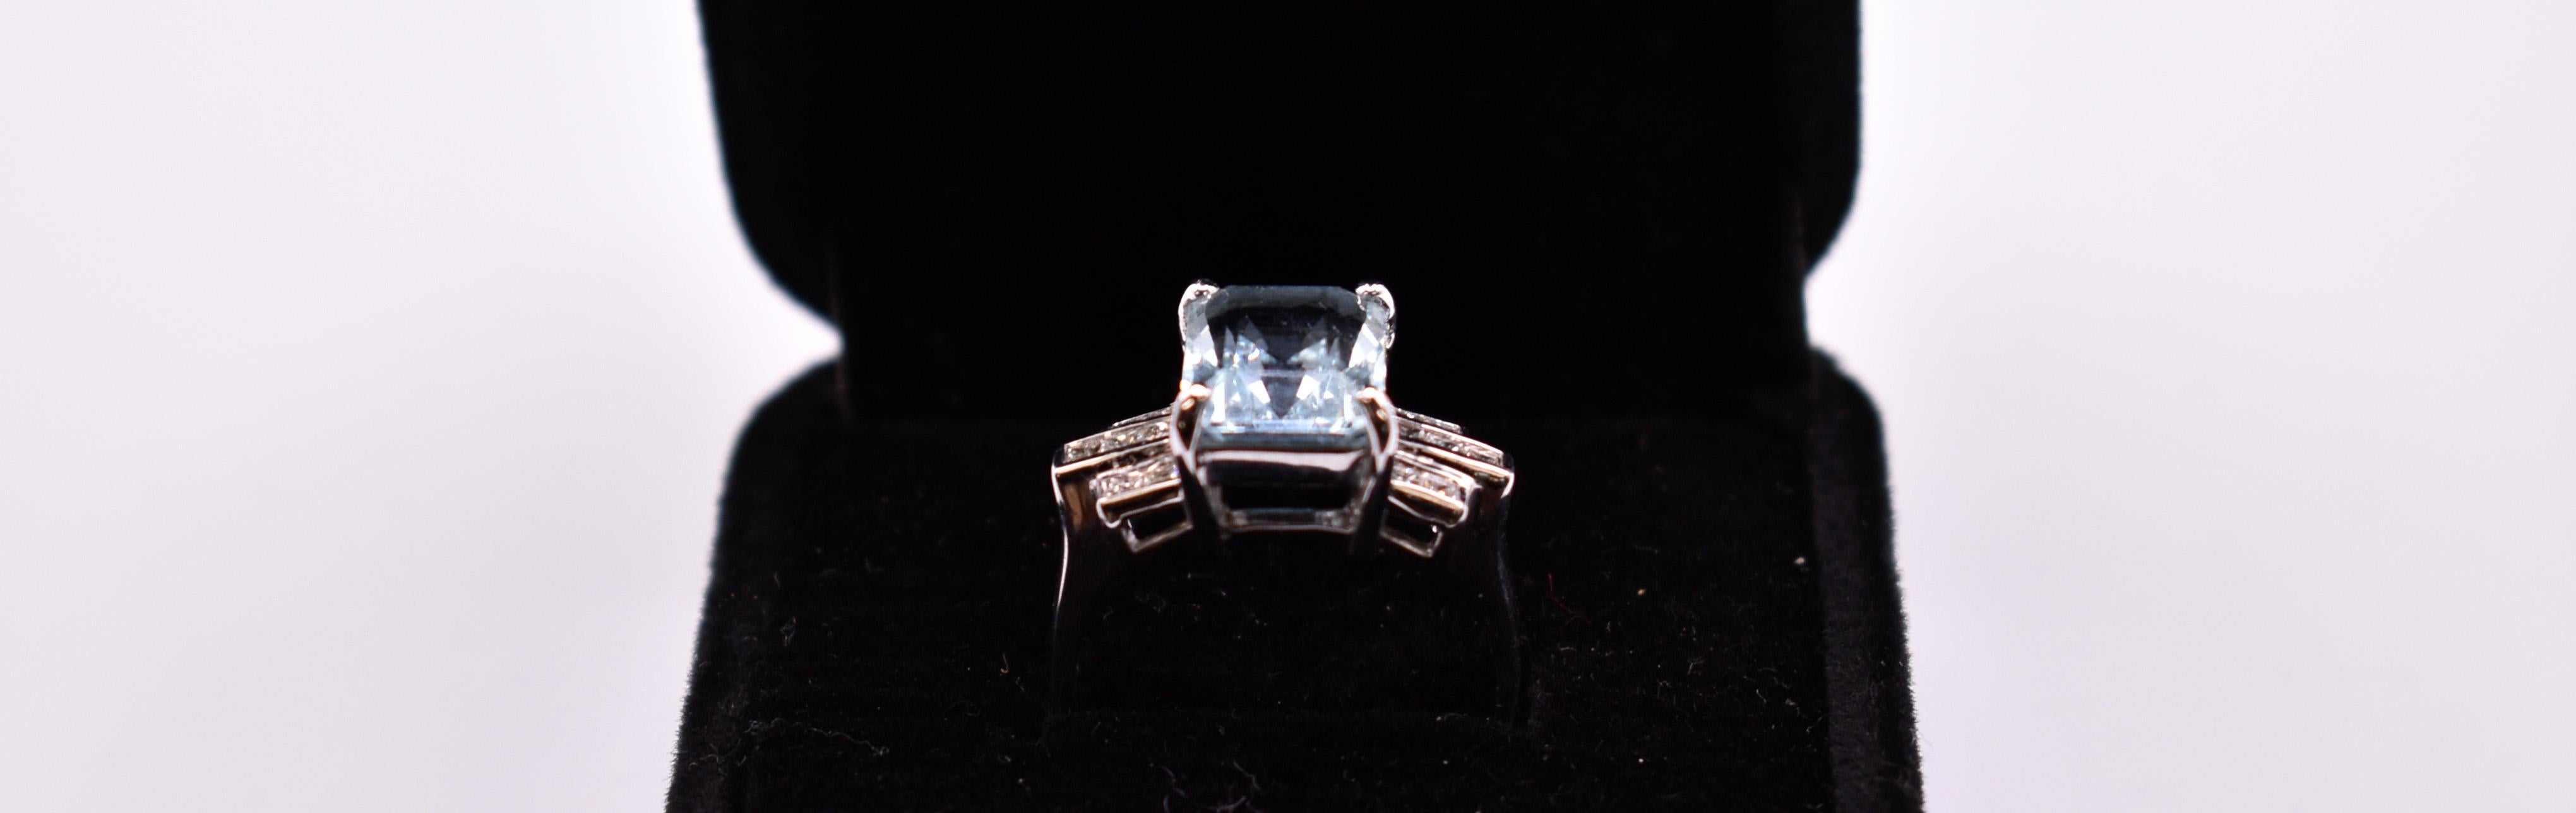 18K White Gold Aquamarine & Diamond Ring For Sale 1